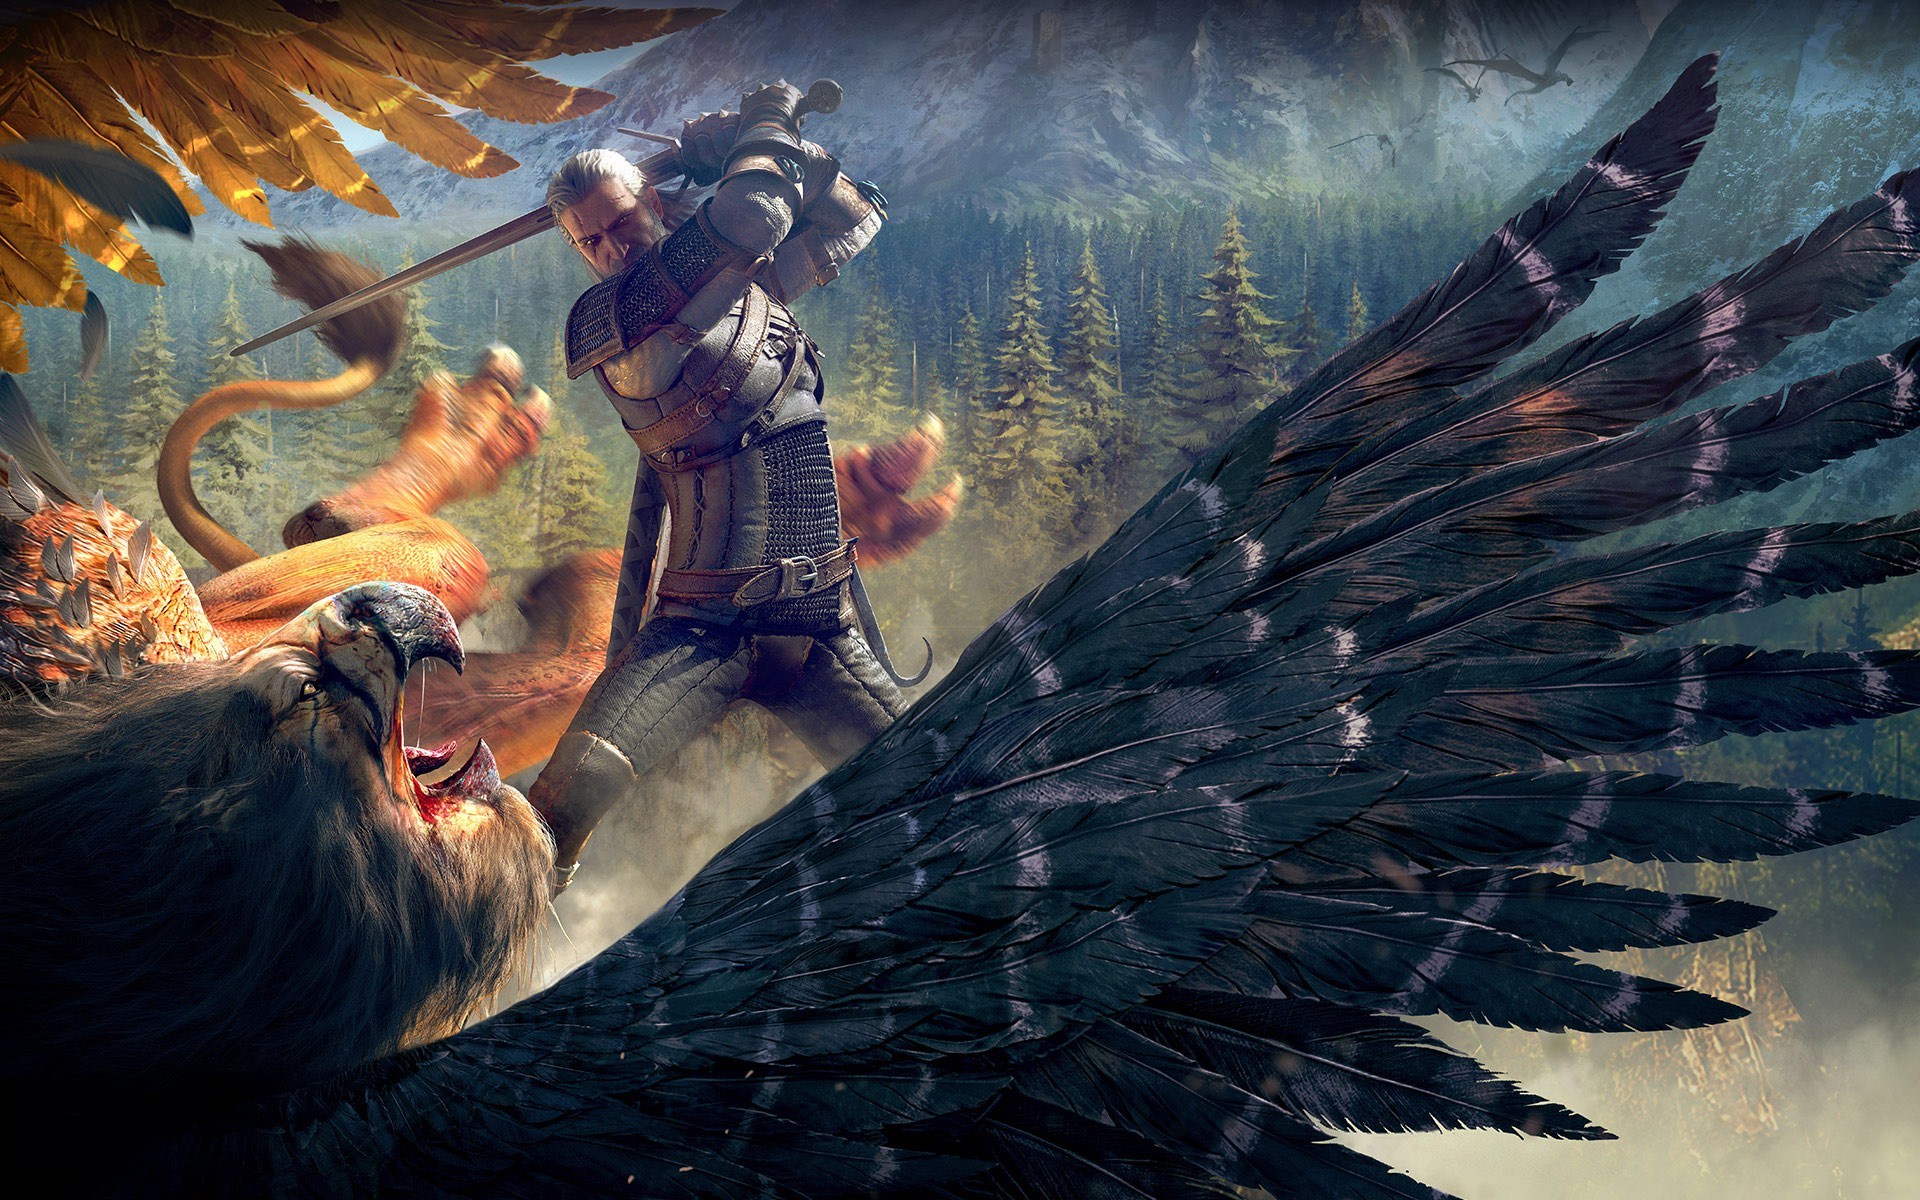 The Witcher 3: Wild Hunt Wallpaper